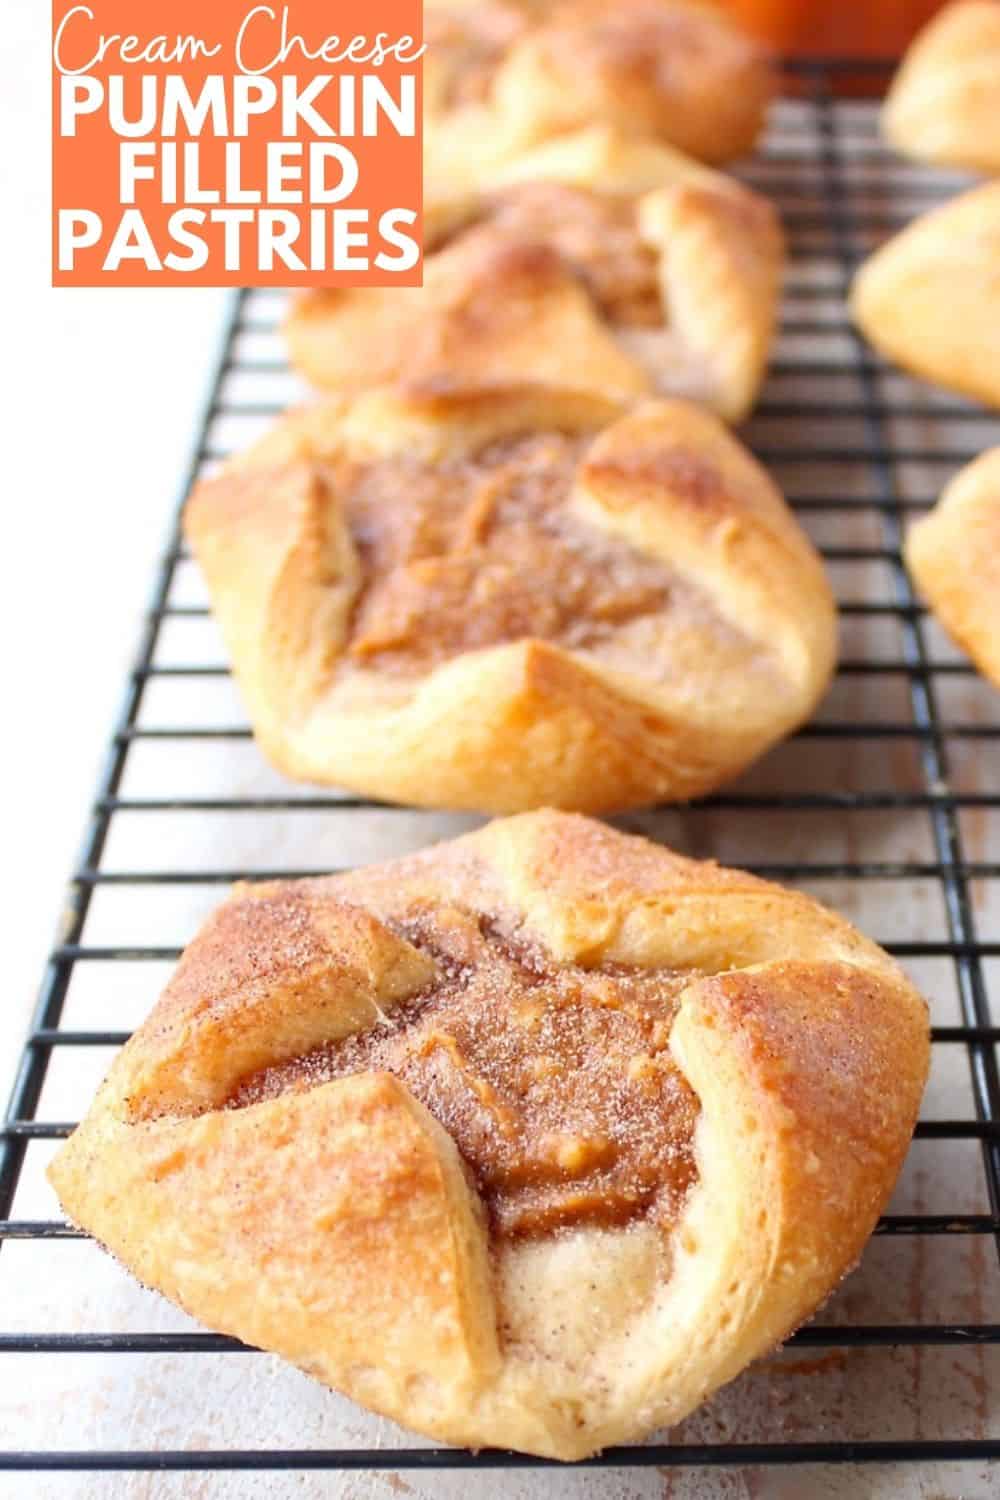 Easy Pumpkin Pastries Recipe - WhitneyBond.com